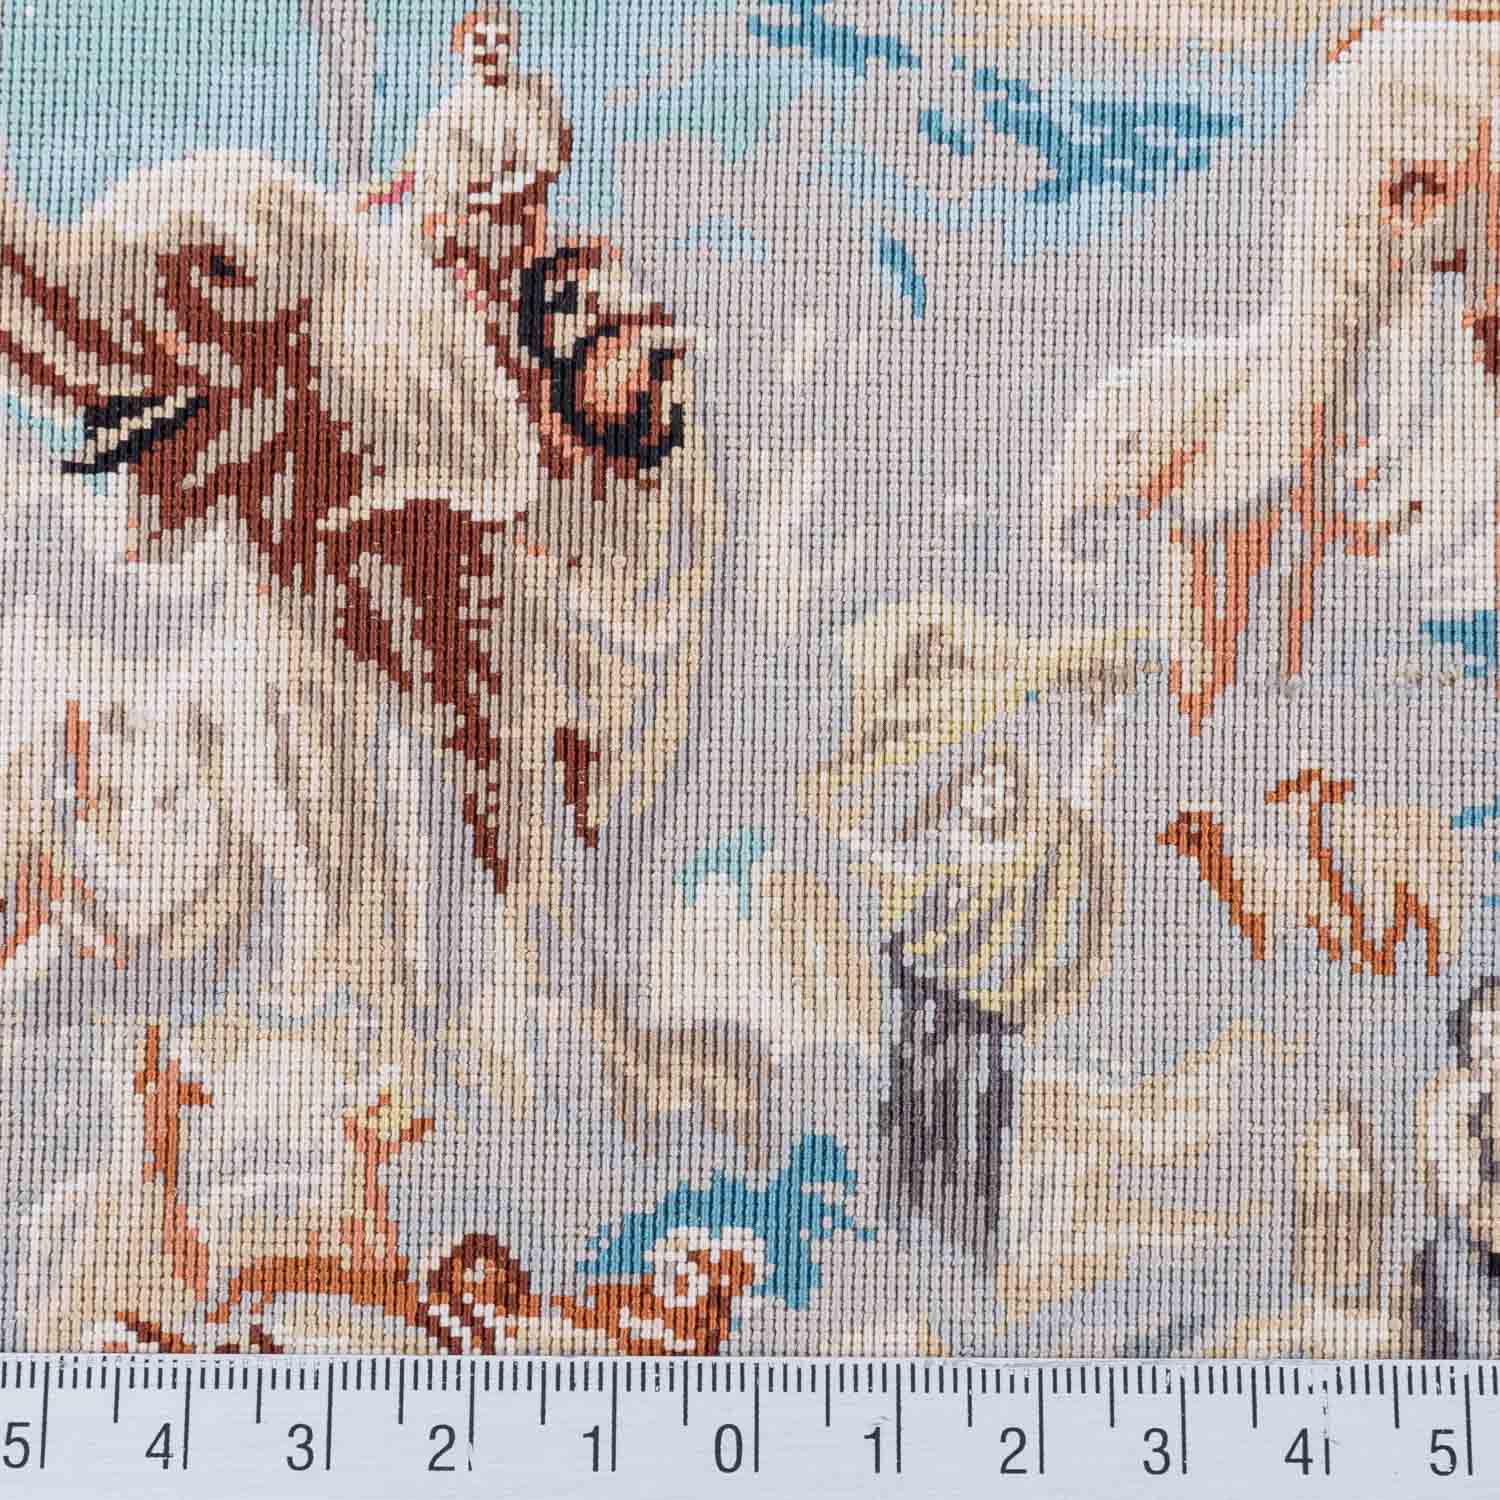 Bildteppich "Arche Noah" aus Seide. HEREKE/TÜRKEI, 20. Jh., 40x63 cm. - Image 6 of 6